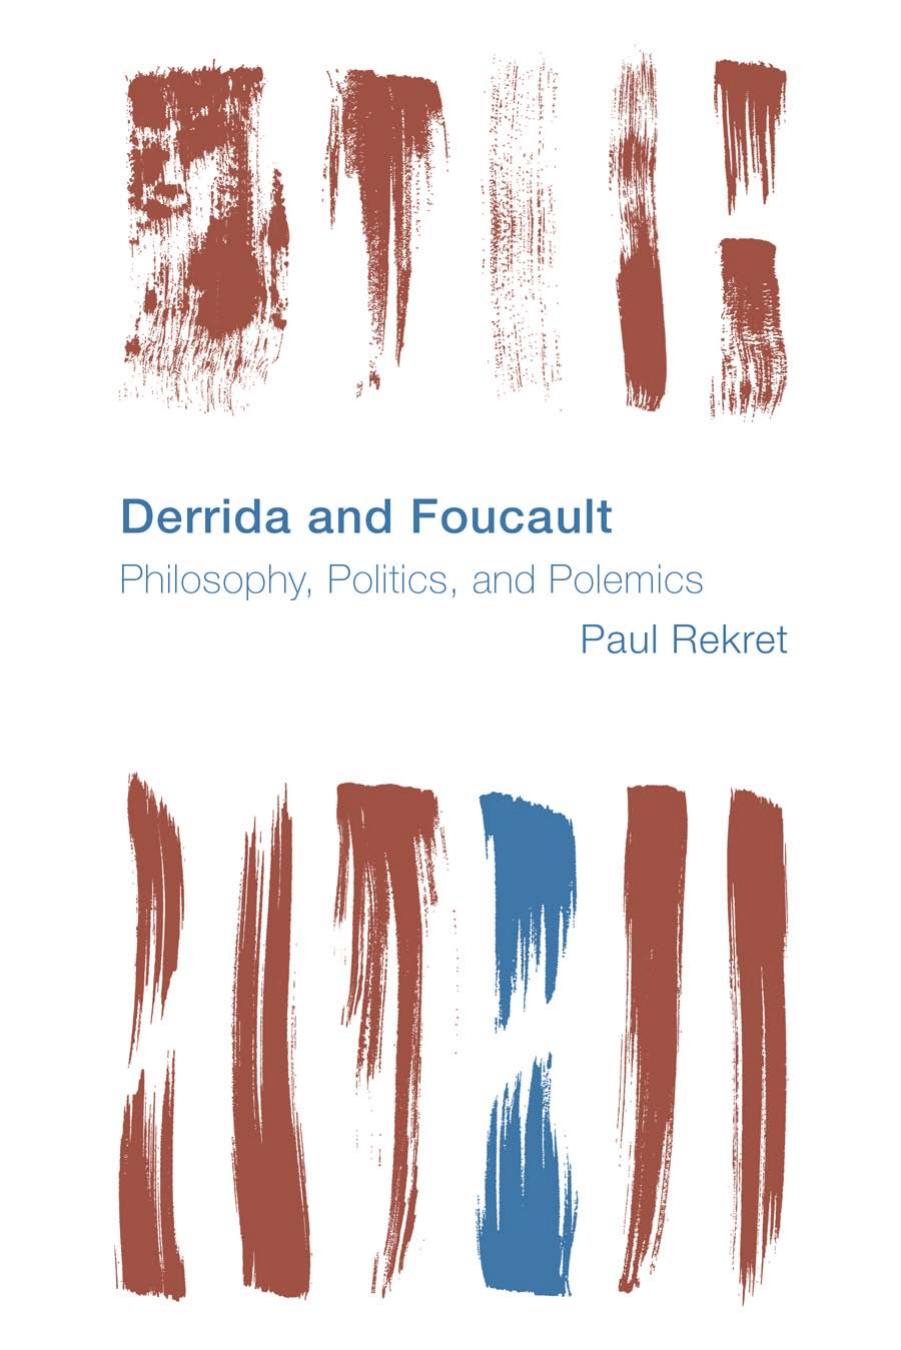 Derrida and Foucault: Philosophy, Politics, and Polemics by Paul Rekret